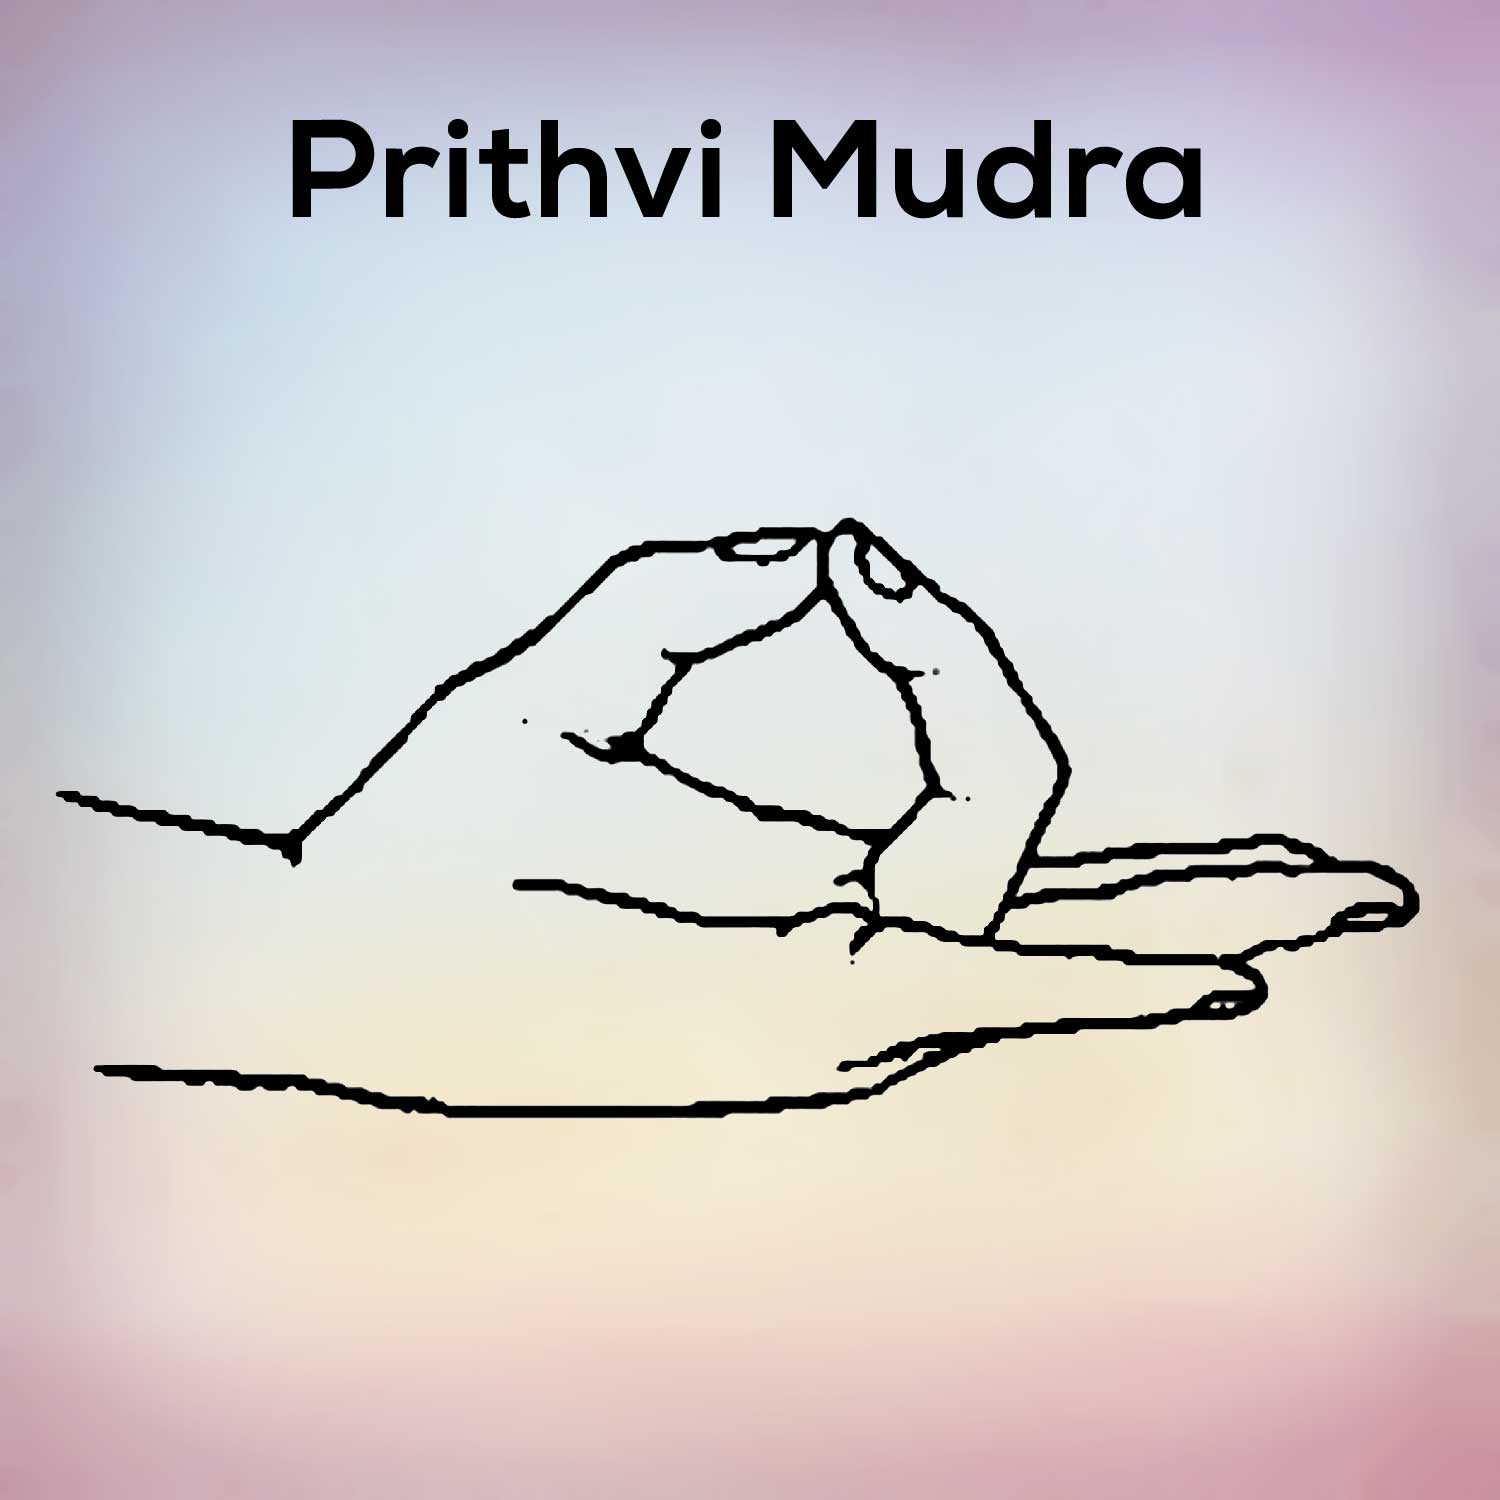 Prithvi Shaamak Mudra – MudraGuide.com